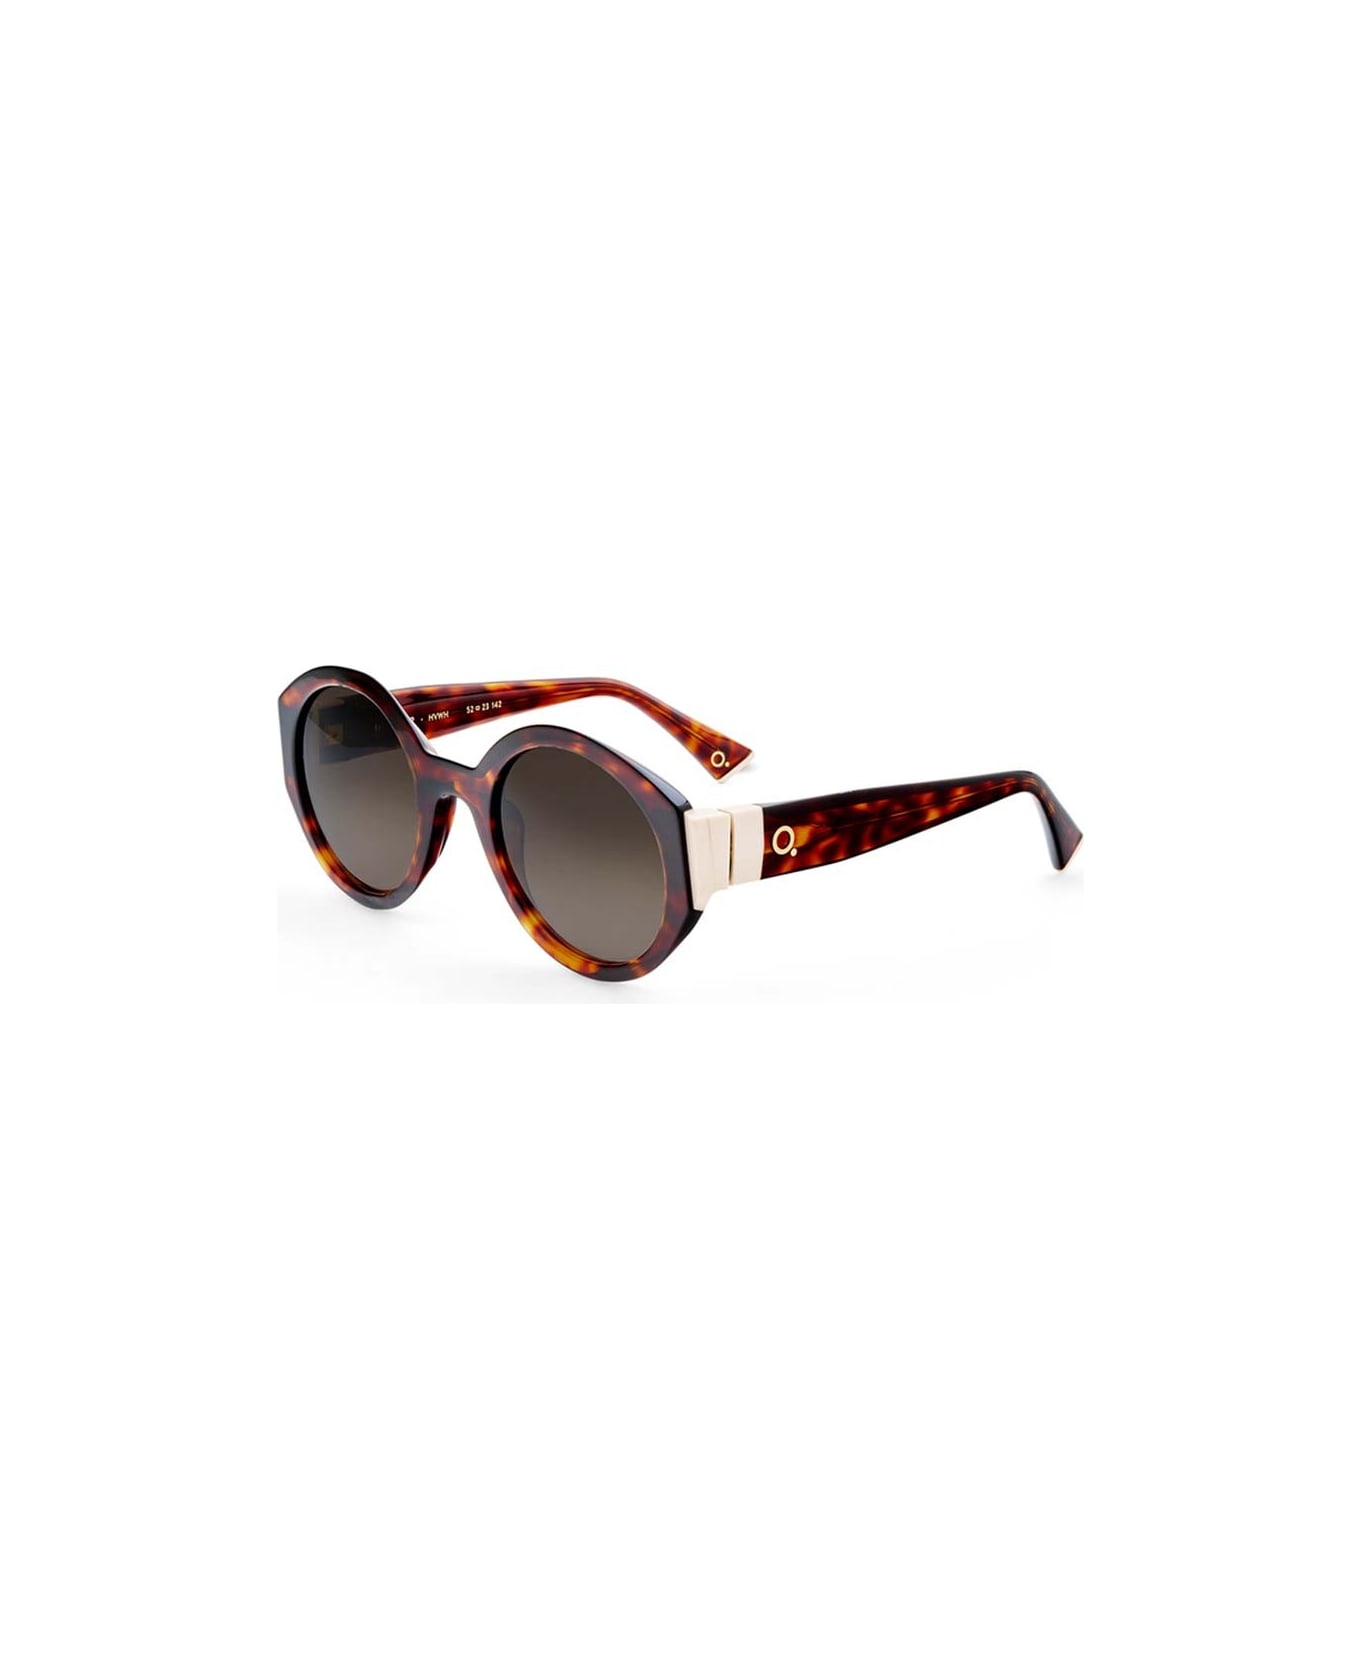 Etnia Barcelona Sunglasses - Havana/Marrone